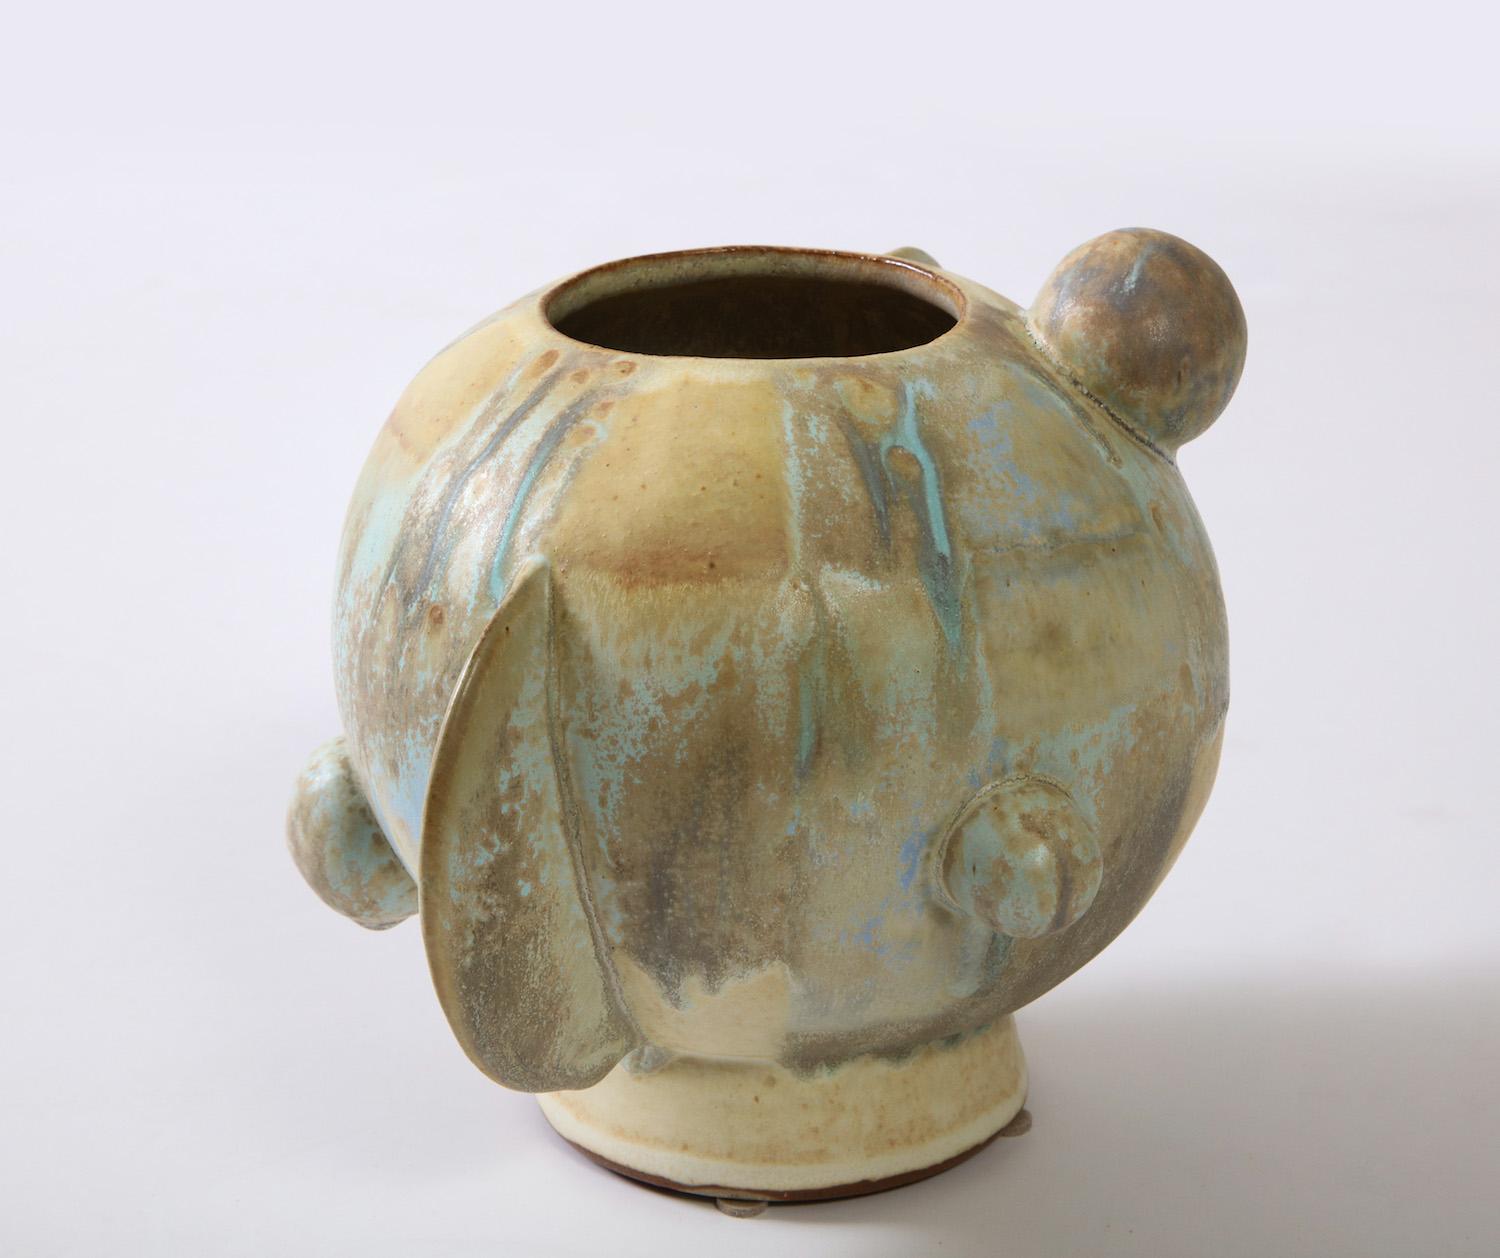 Small Orb Vase #2 by Robbie Heidinger 1